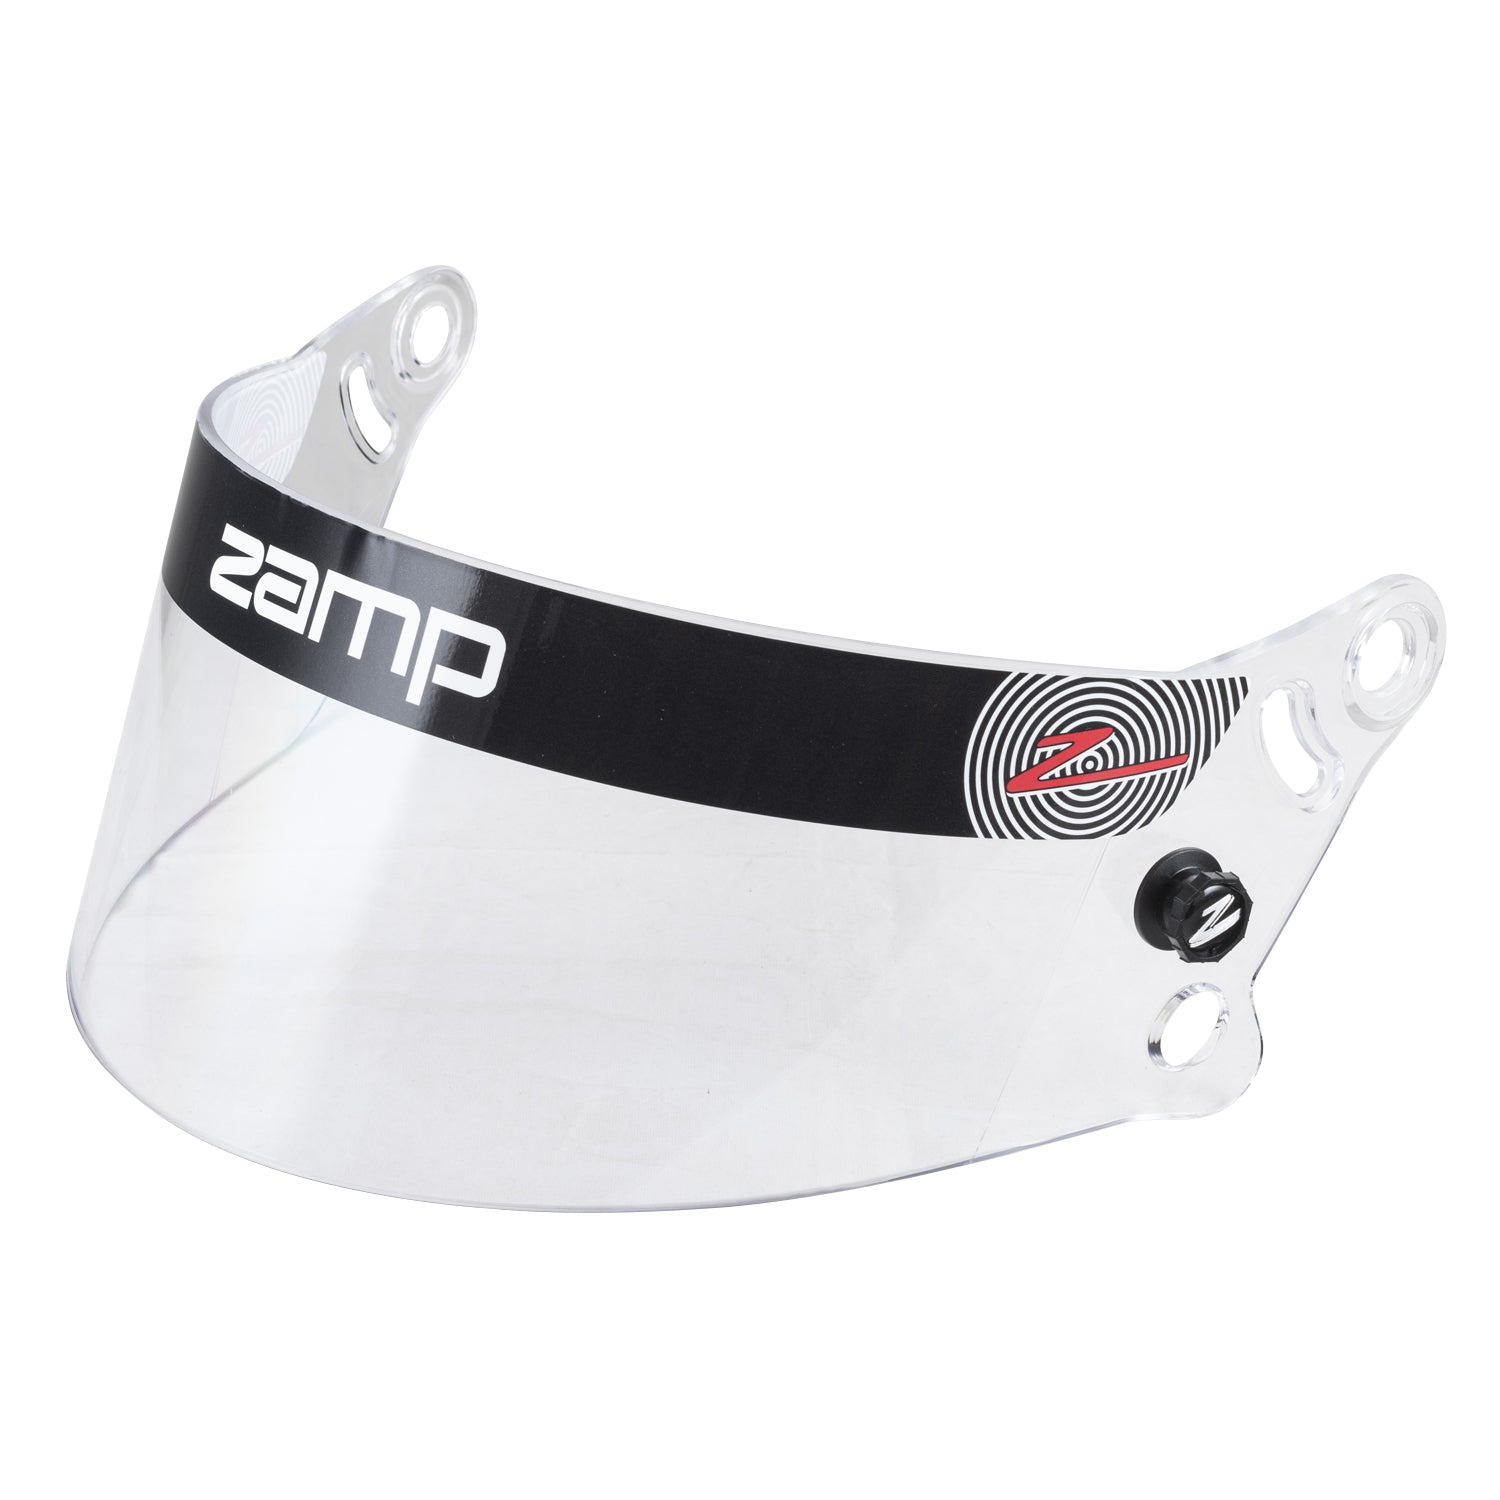 Zamp Solar Shield Z-20 Photochromatic Helmets and Accessories Helmet Shields main image